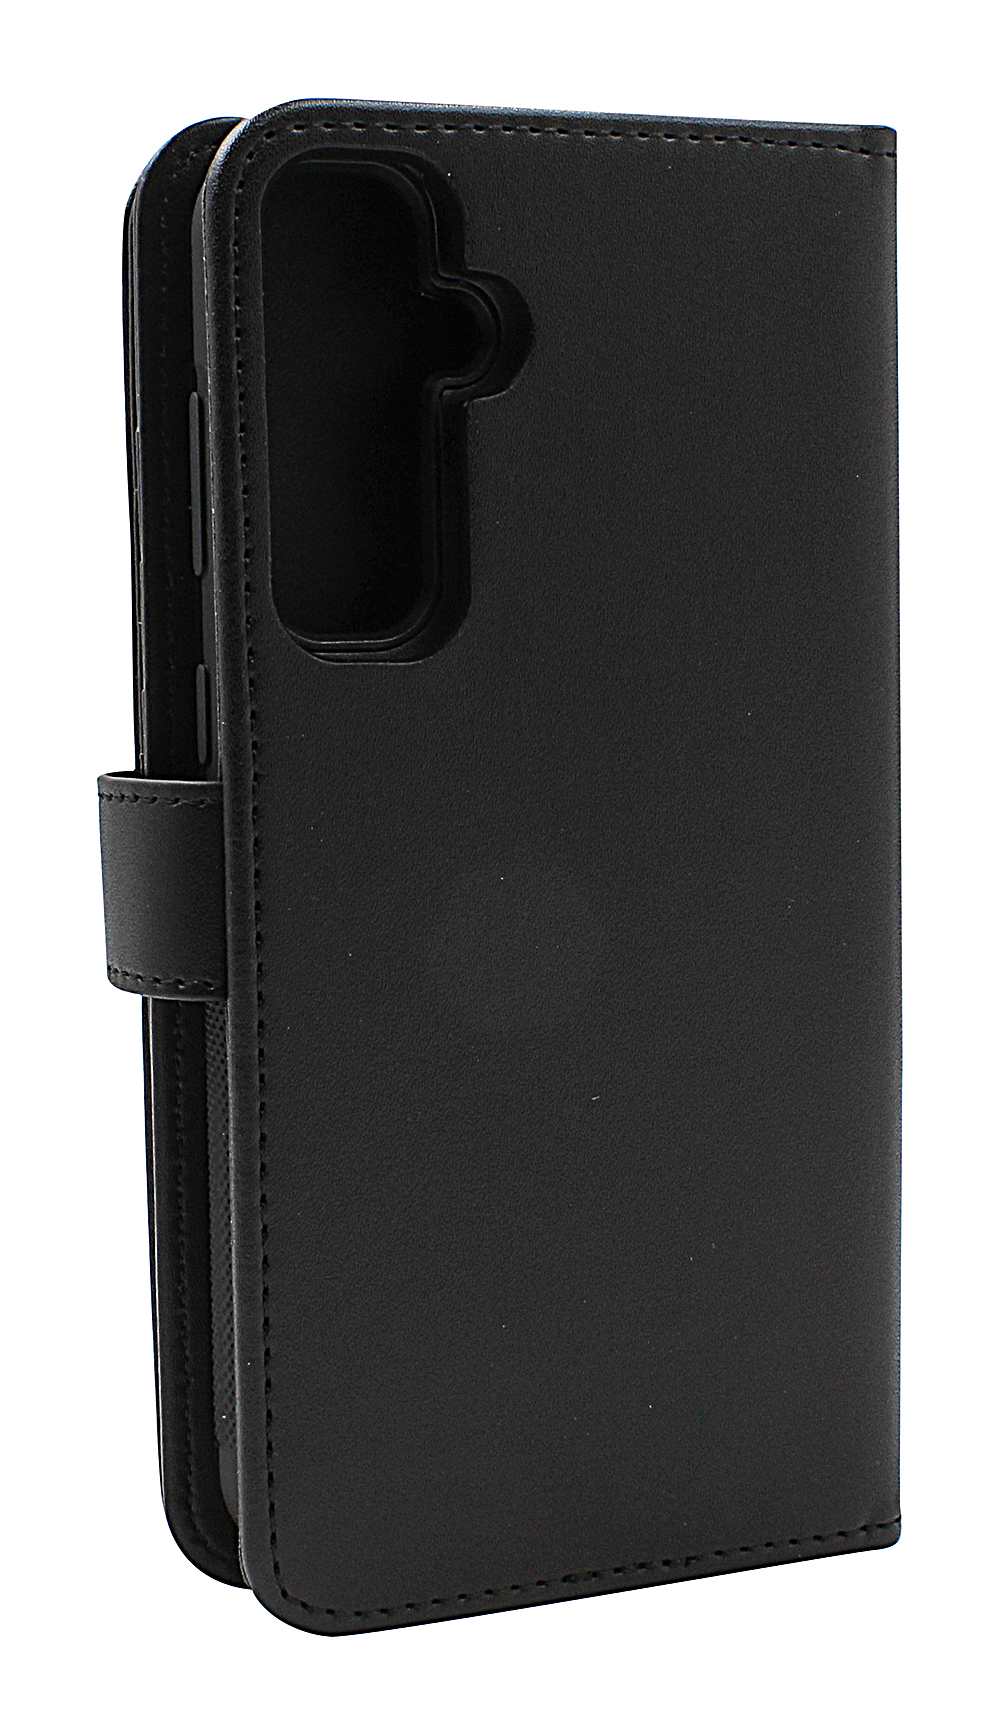 CoverInSkimblocker XL Magnet Fodral Samsung Galaxy S23 FE 5G